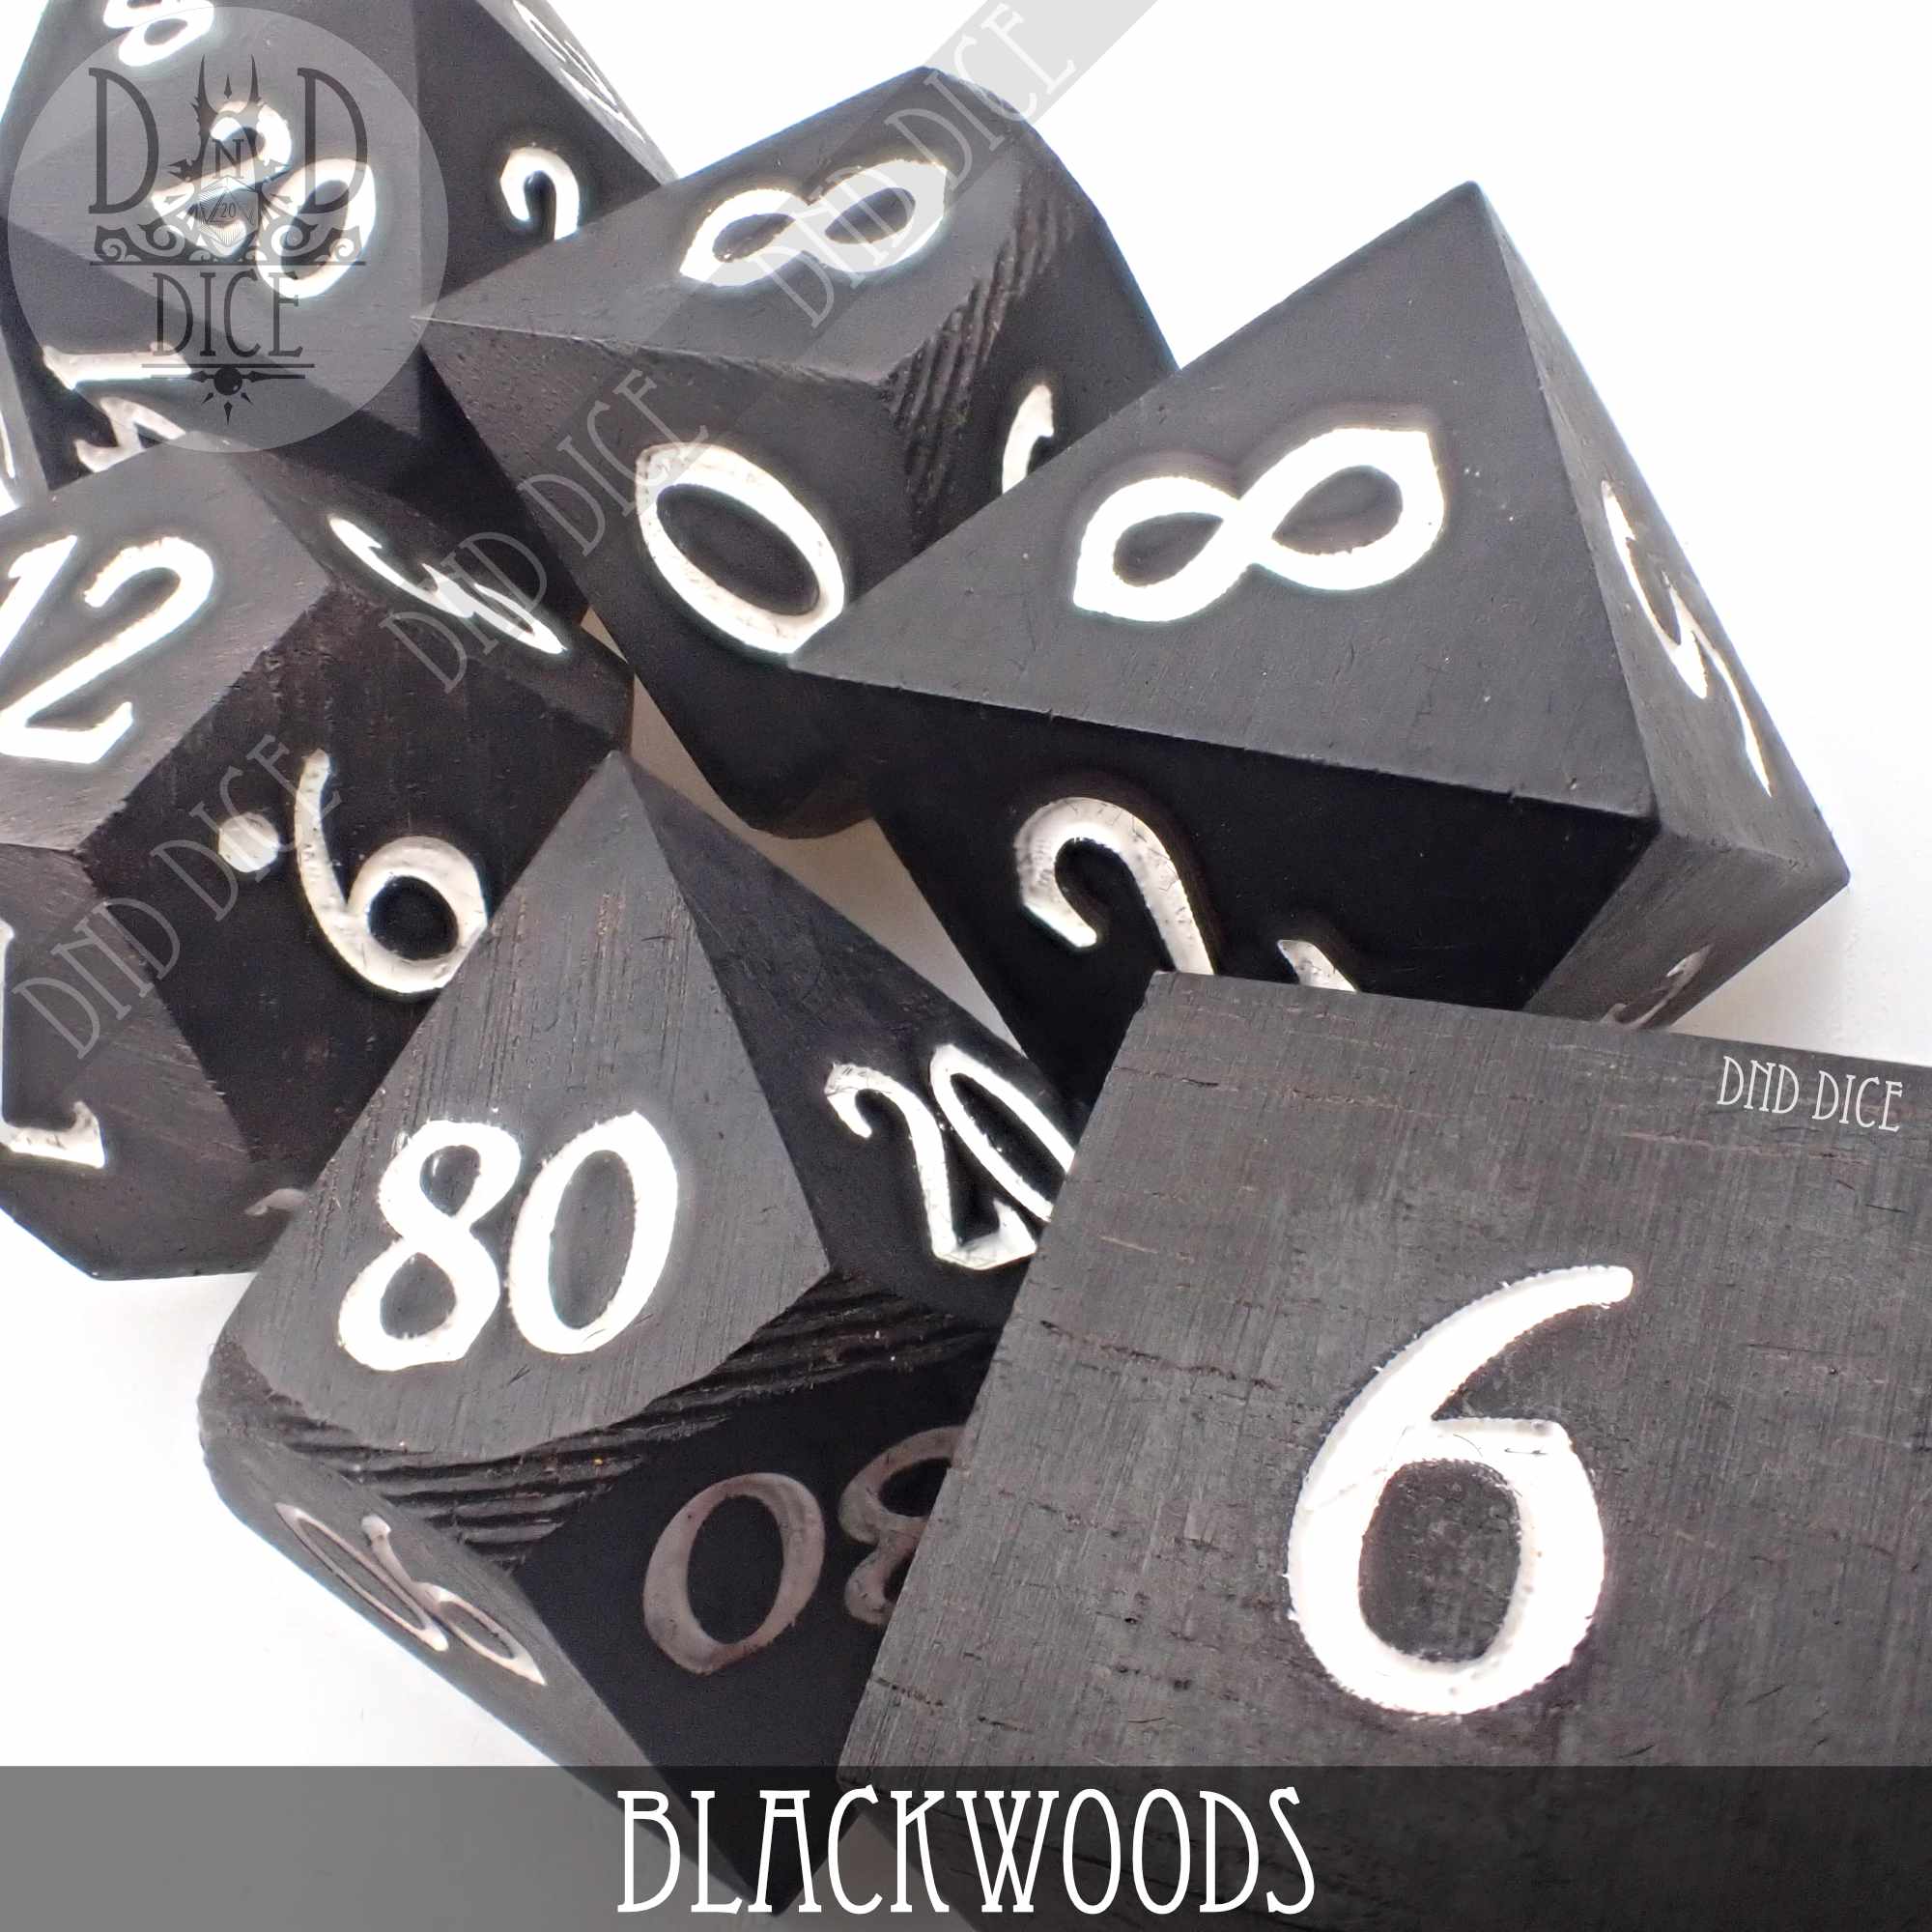 Blackwoods Wood Dice Set (Gift Box)